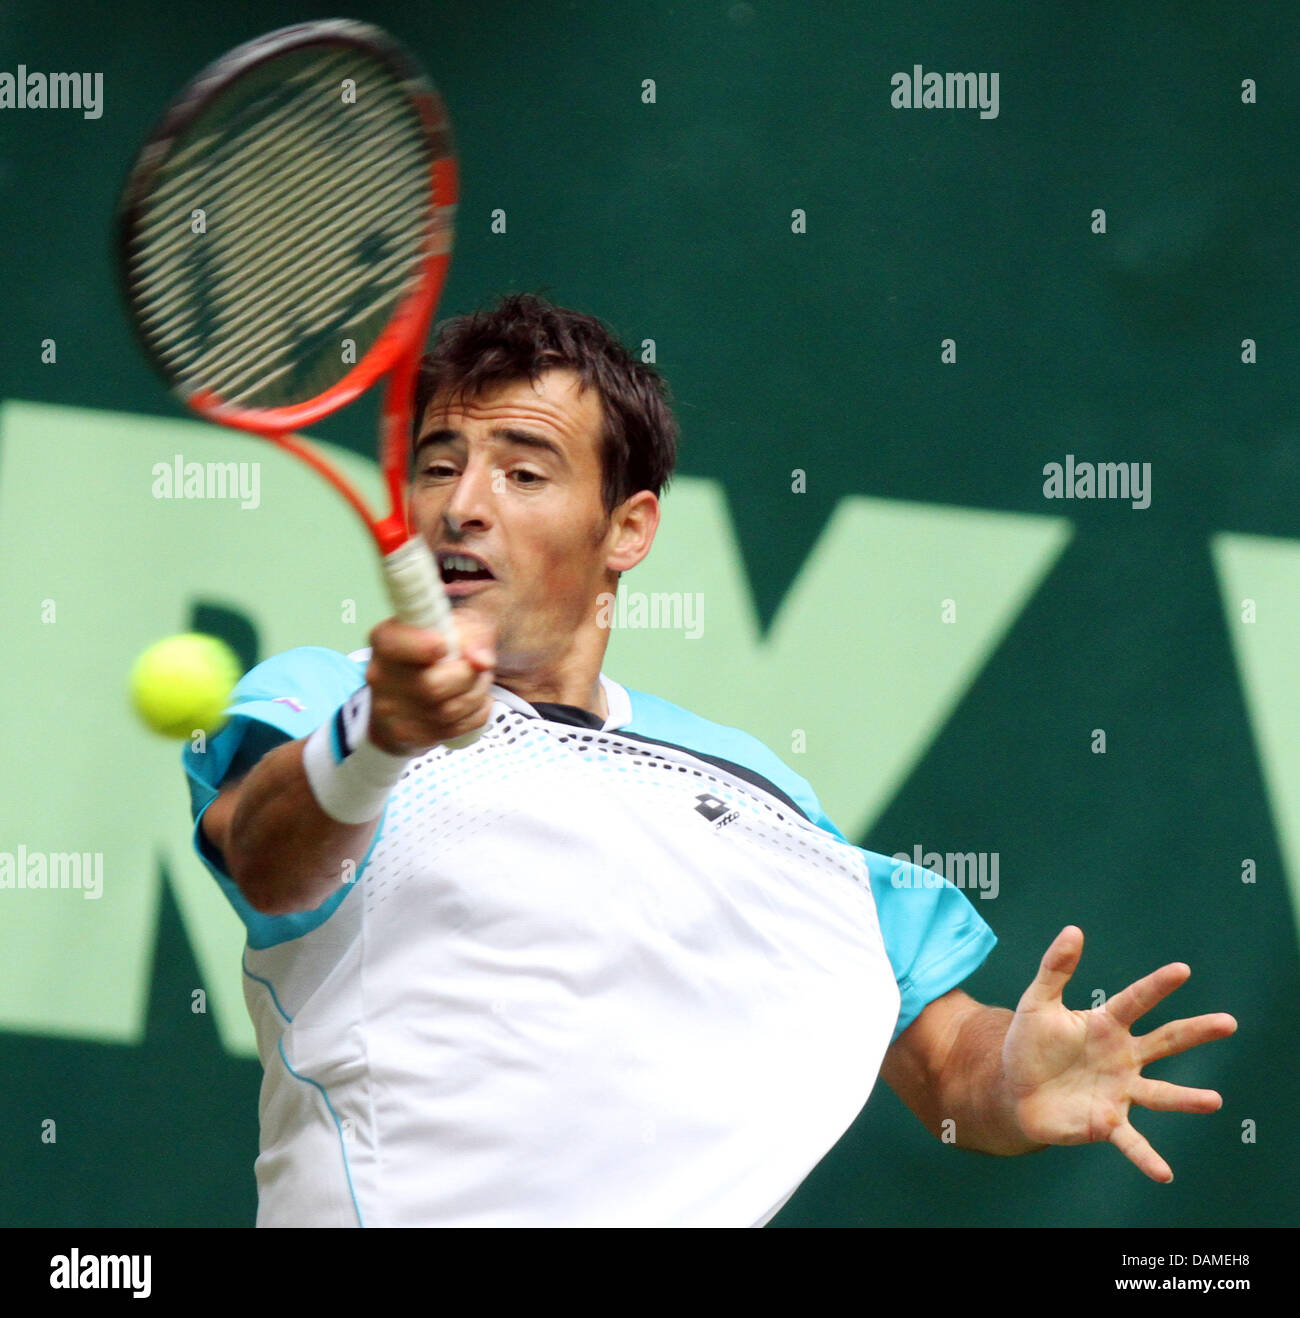 Croatian tennis player ivan dodig hi-res stock photography and images -  Alamy